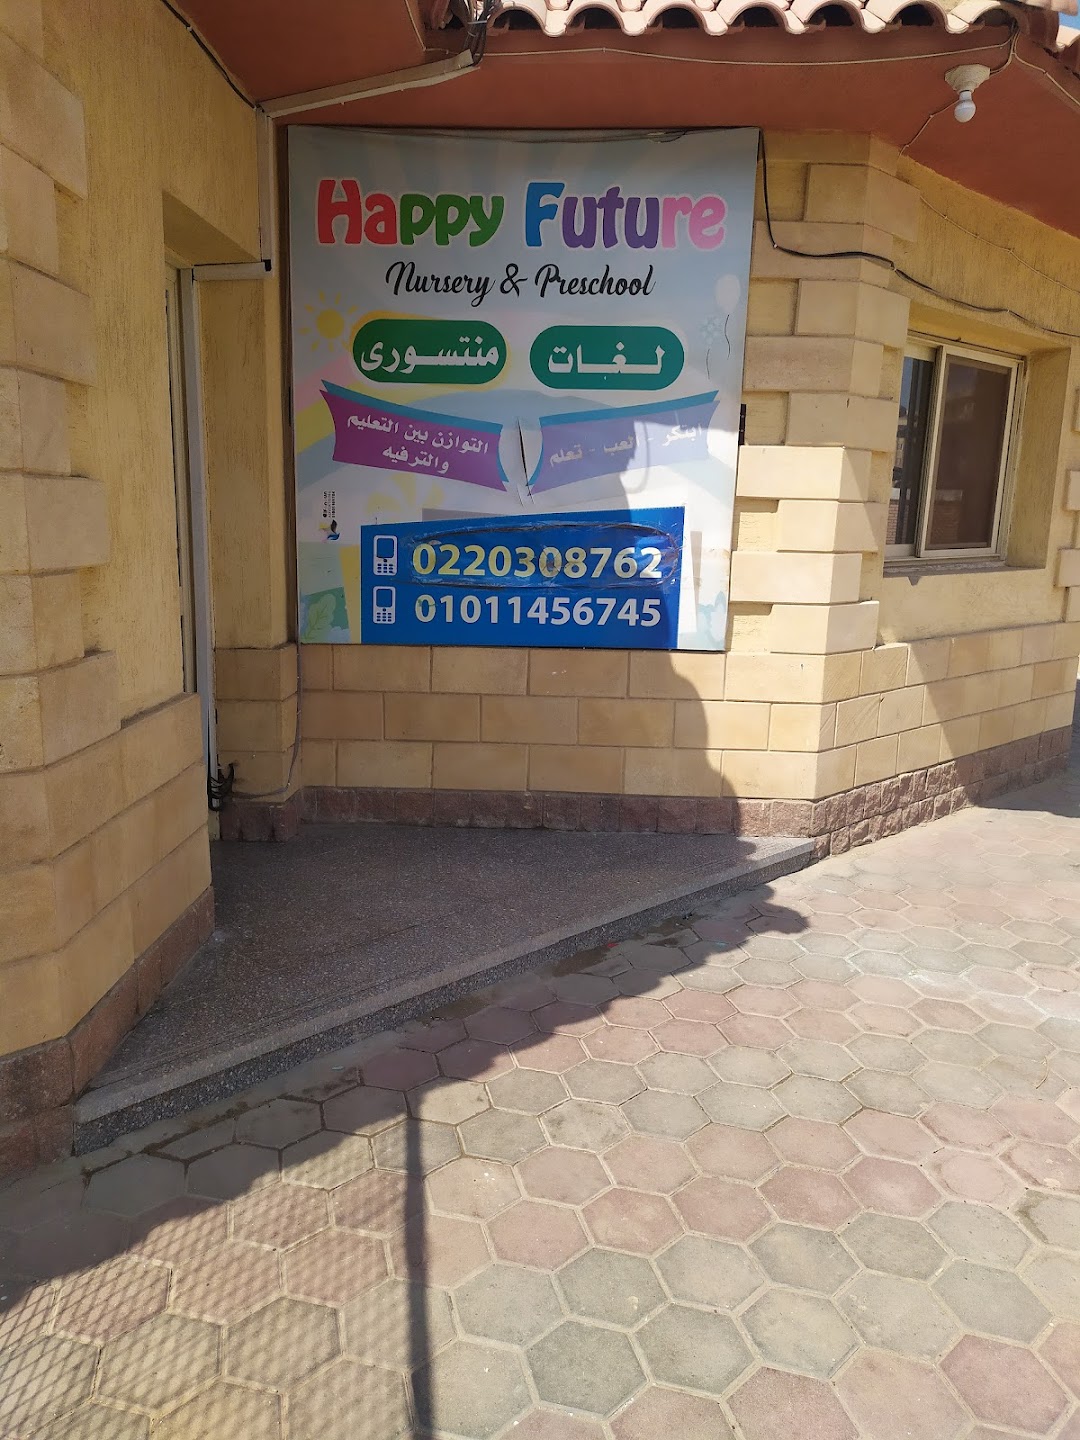 Happy Future Nursery